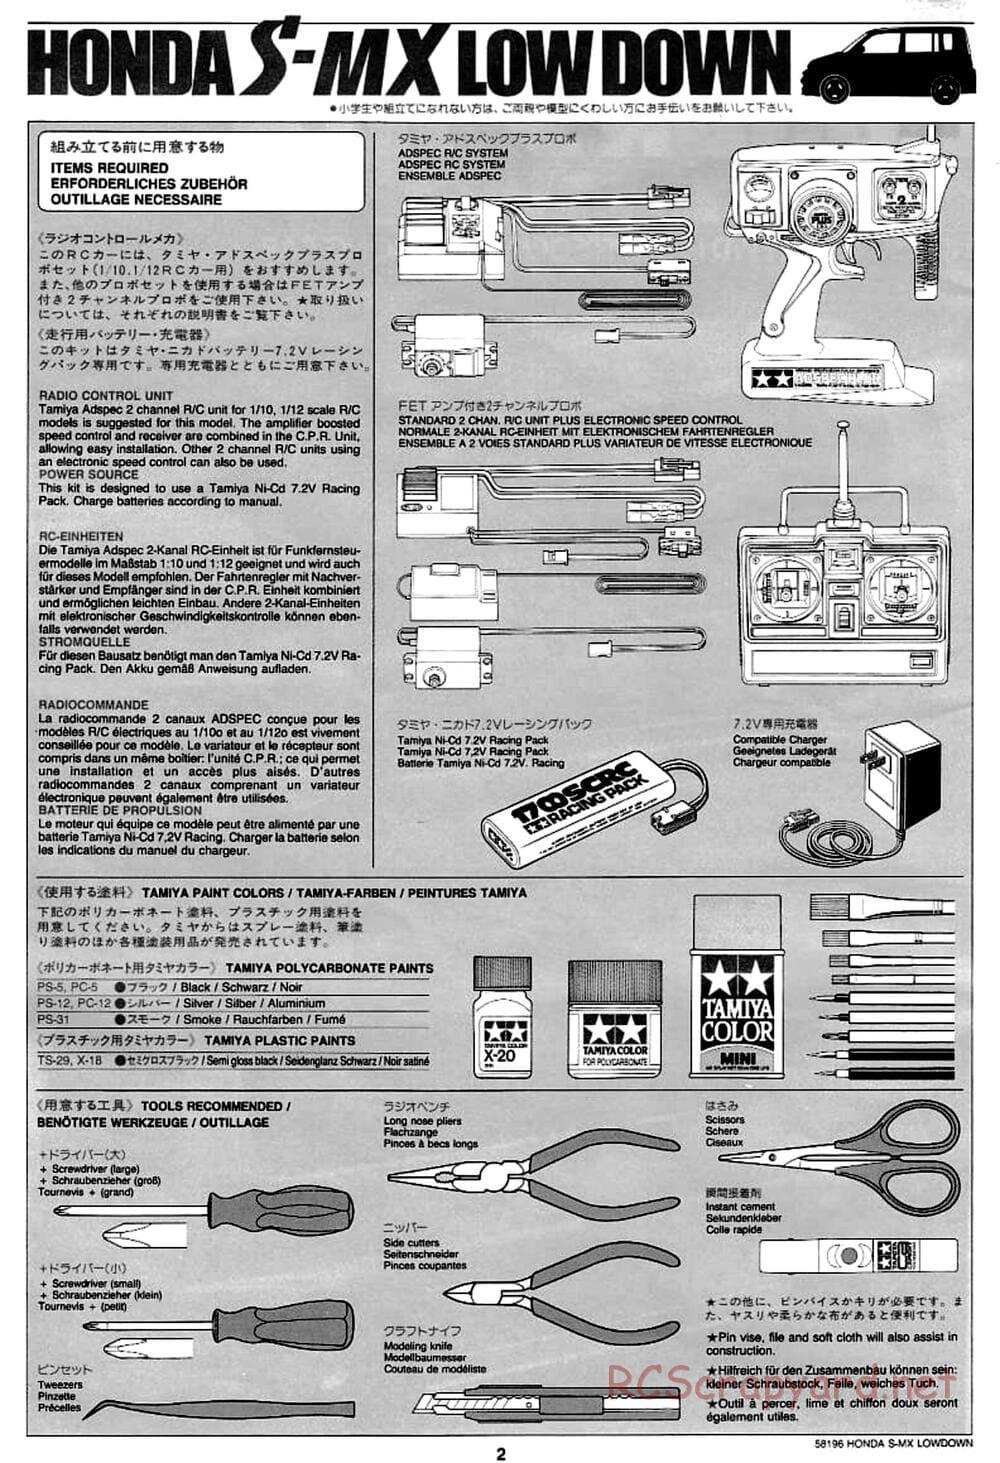 Tamiya - Honda S-MX Lowdown - M01 Chassis - Manual - Page 2